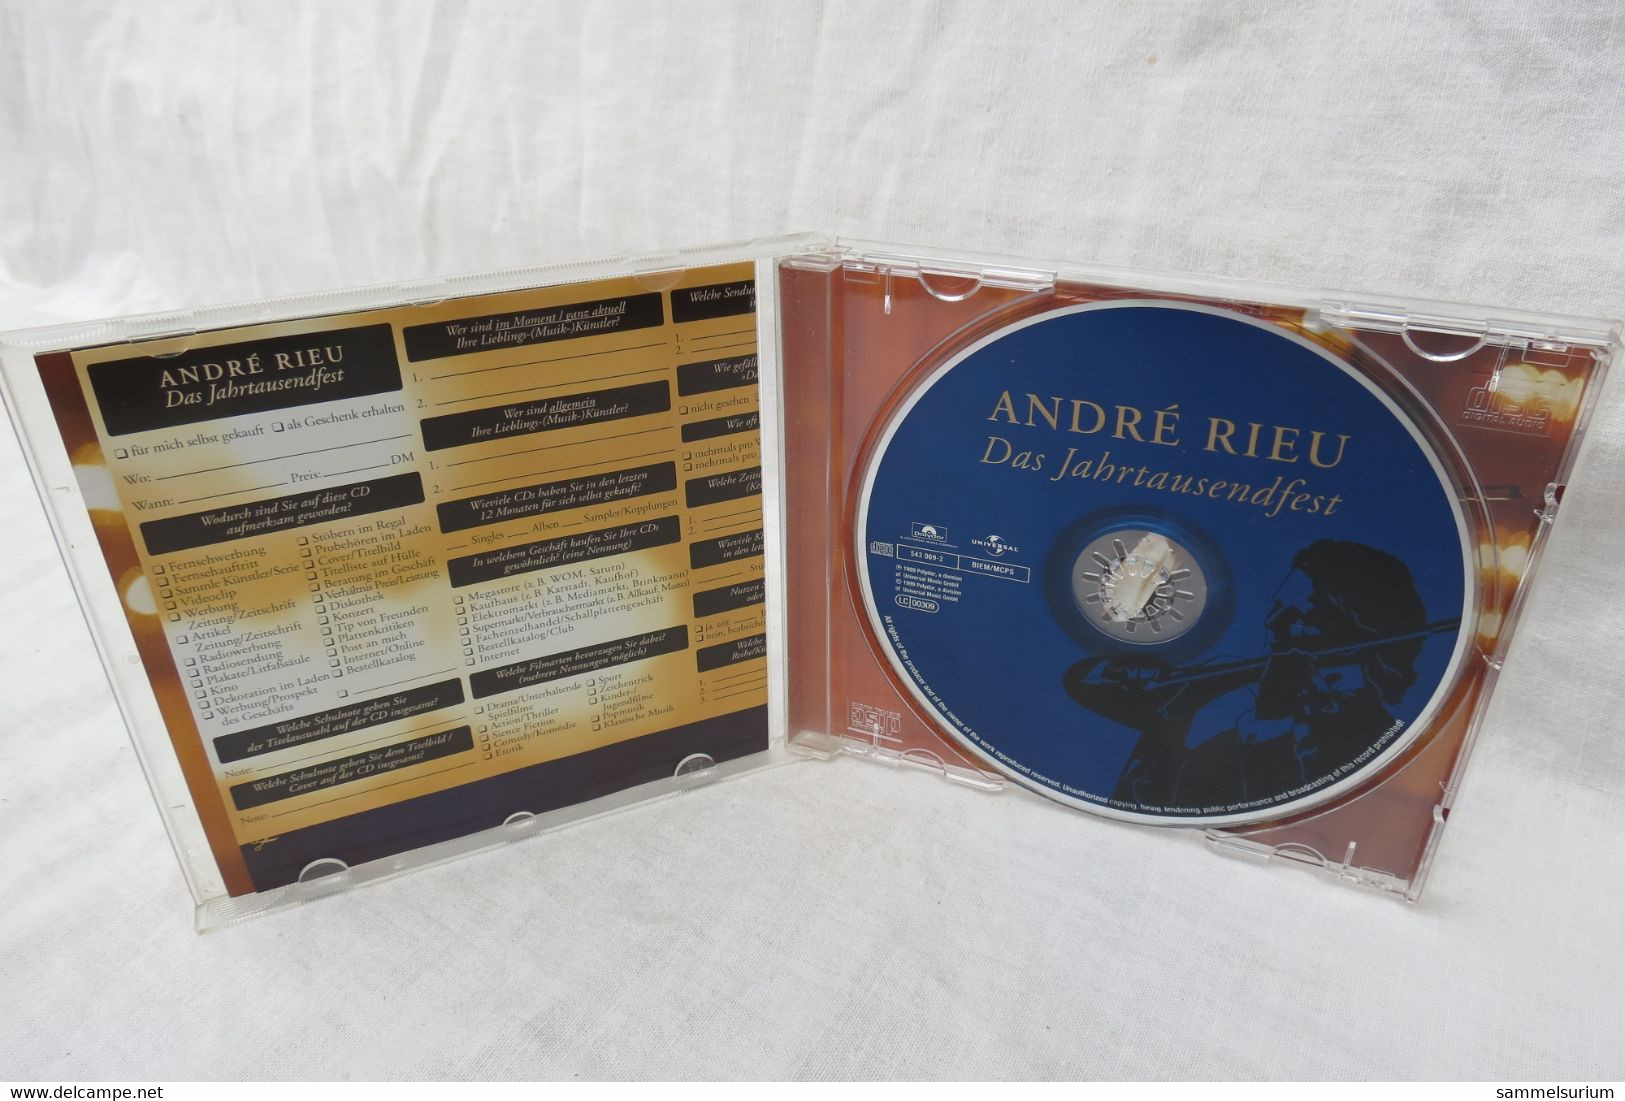 CD "André Rieu" Das Jahrtausendfest - Instrumental